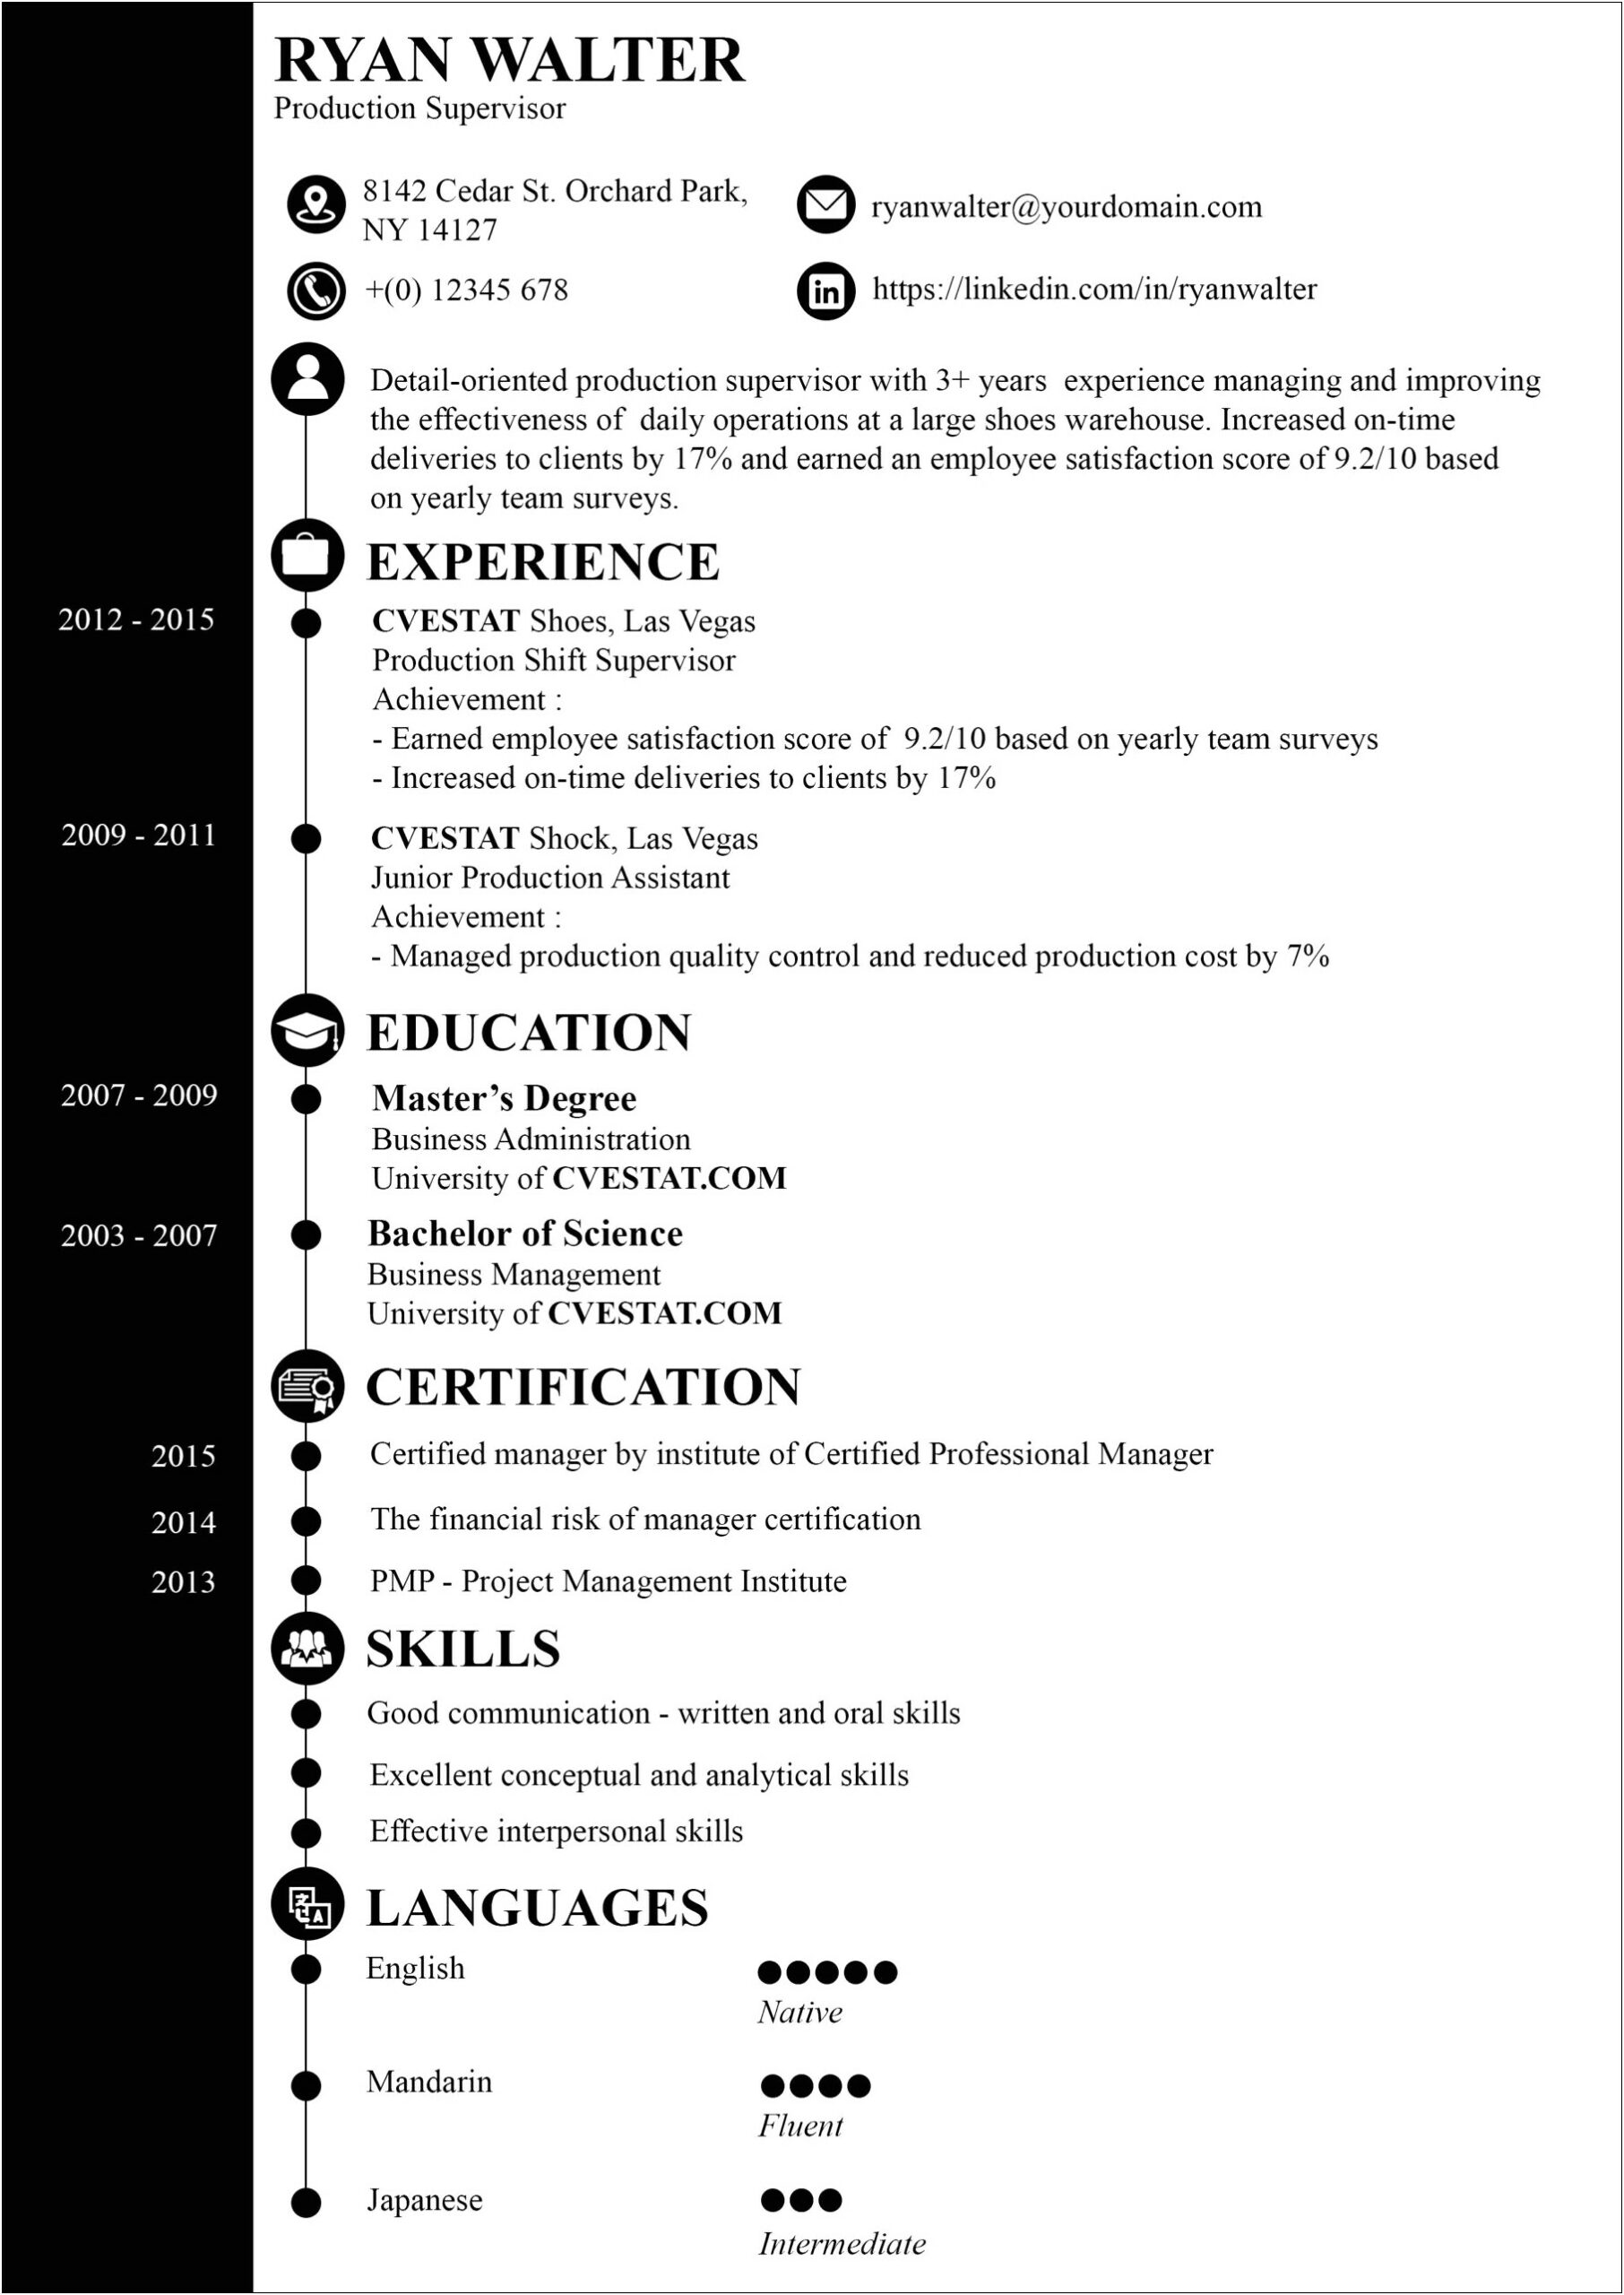 Sample Of Resume Executive Summary